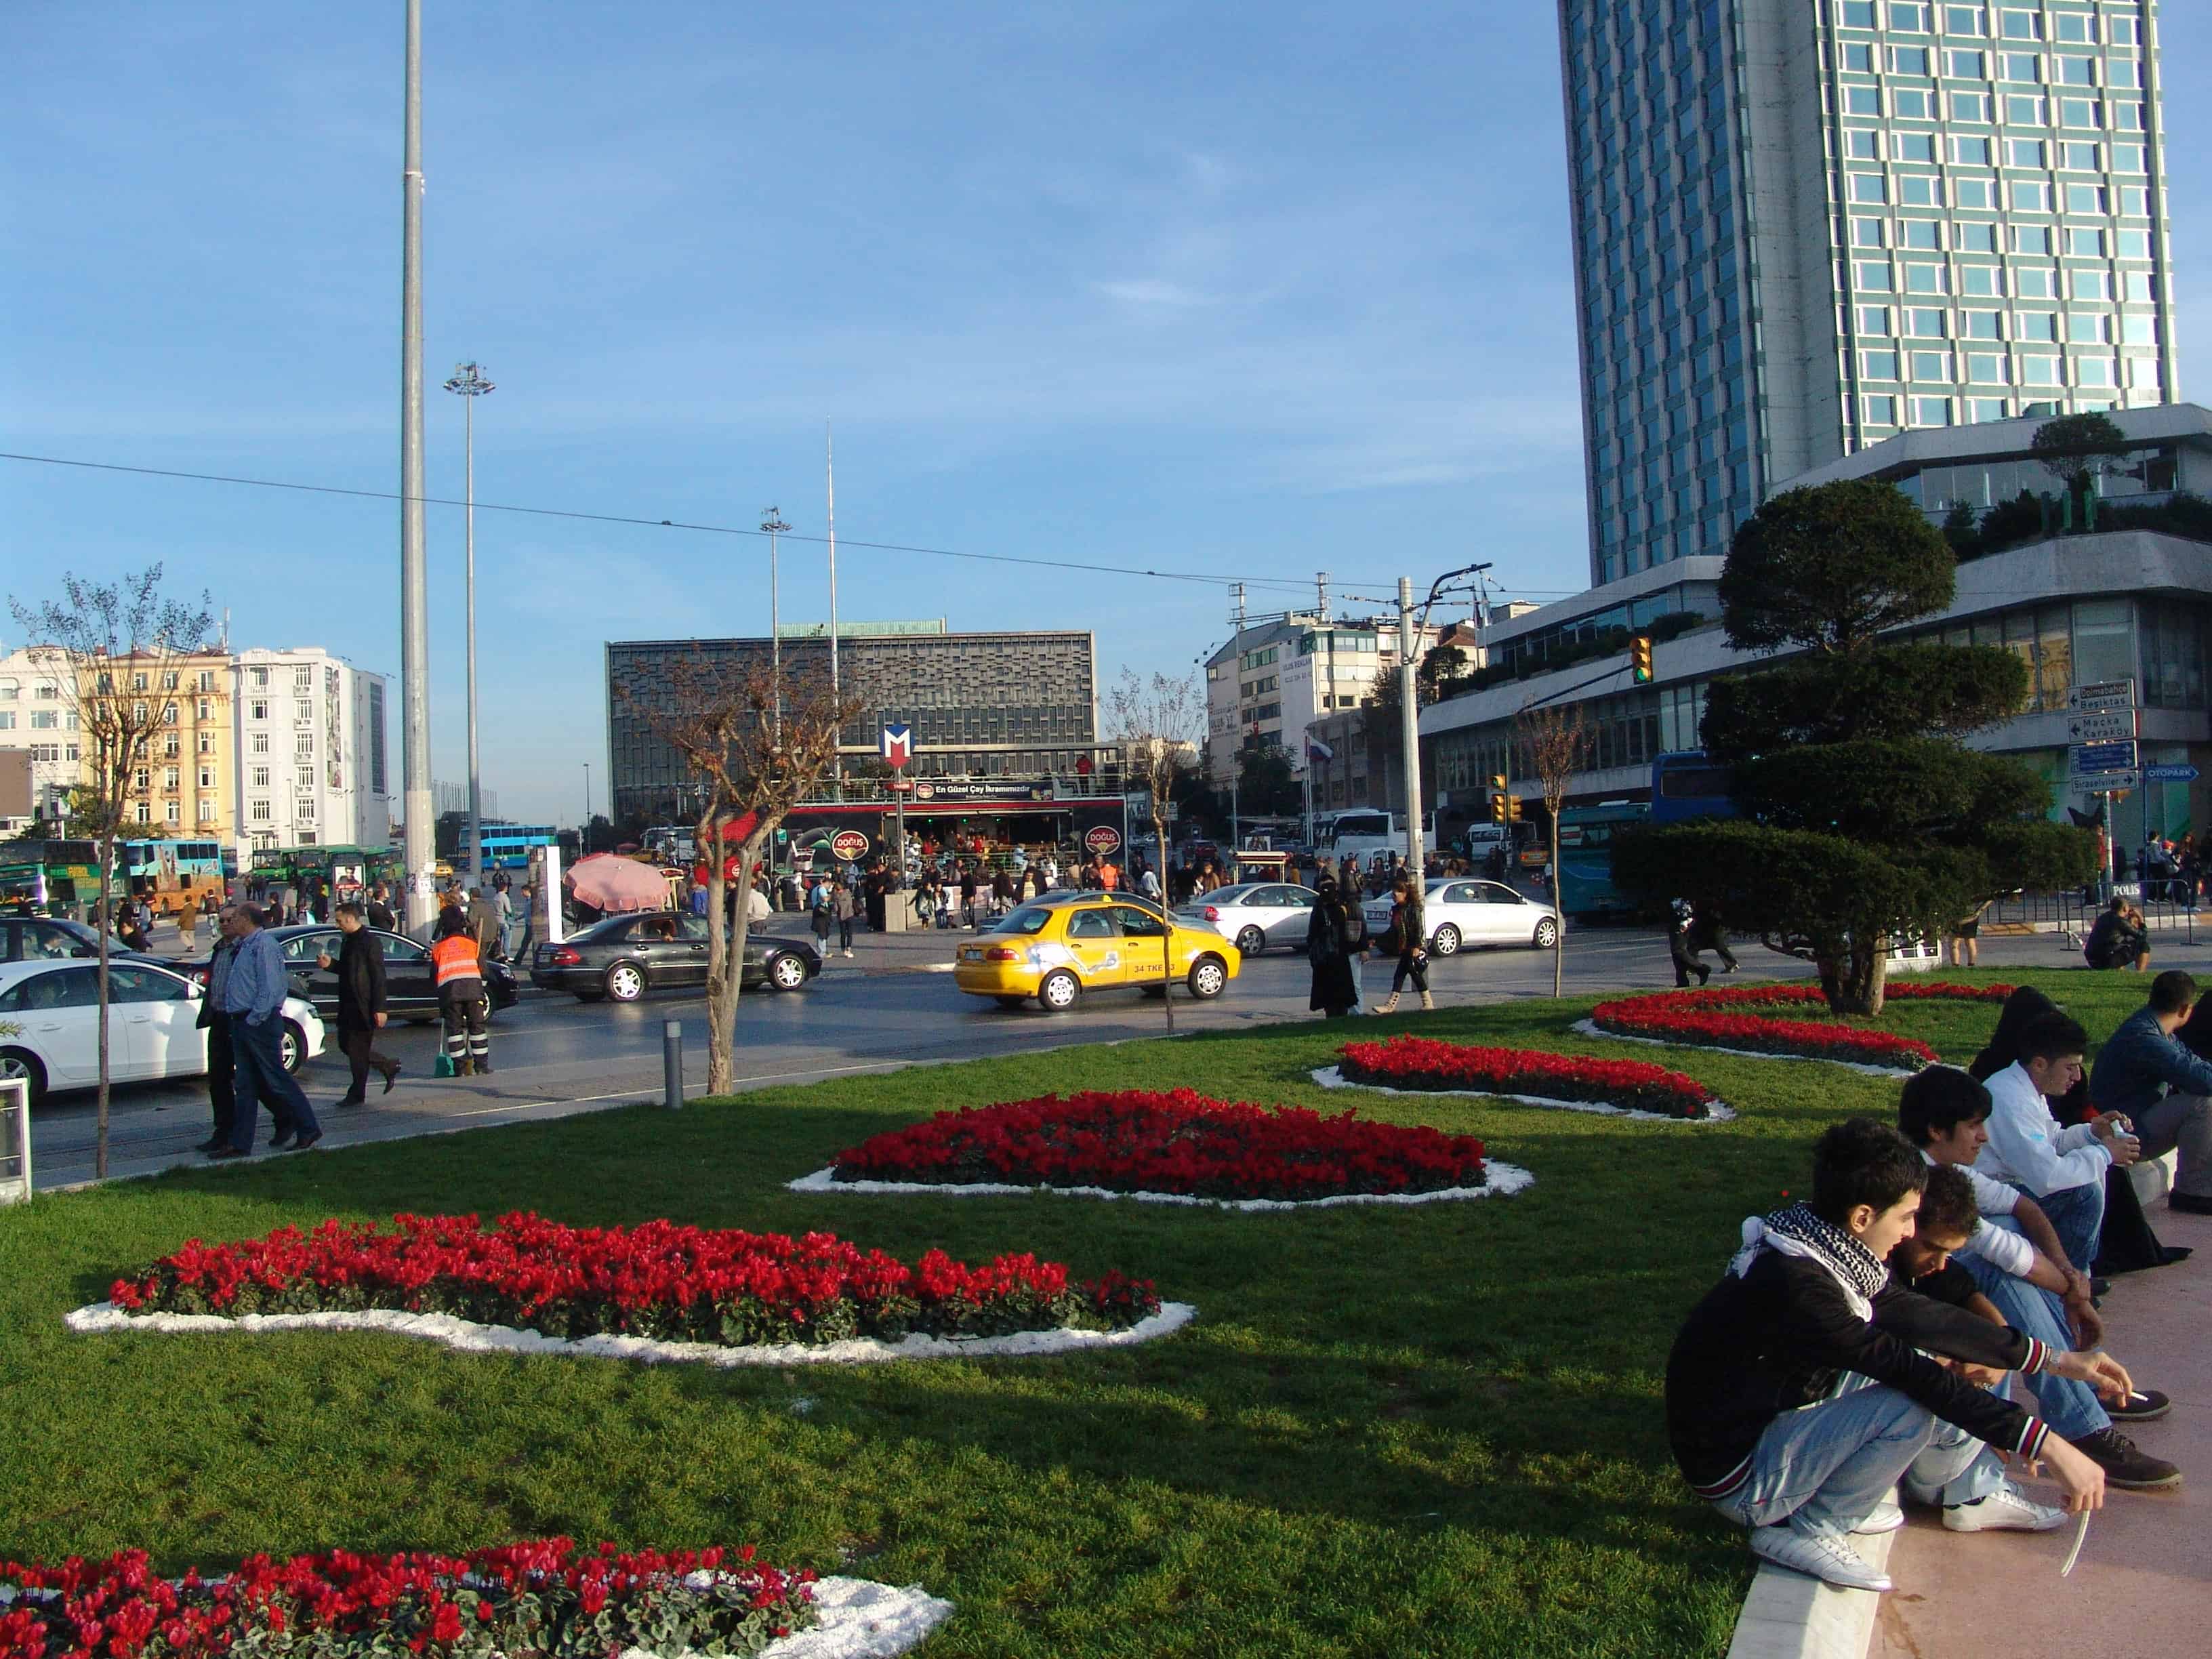 Looking towards the old Atatürk Cultural Center in November 2010